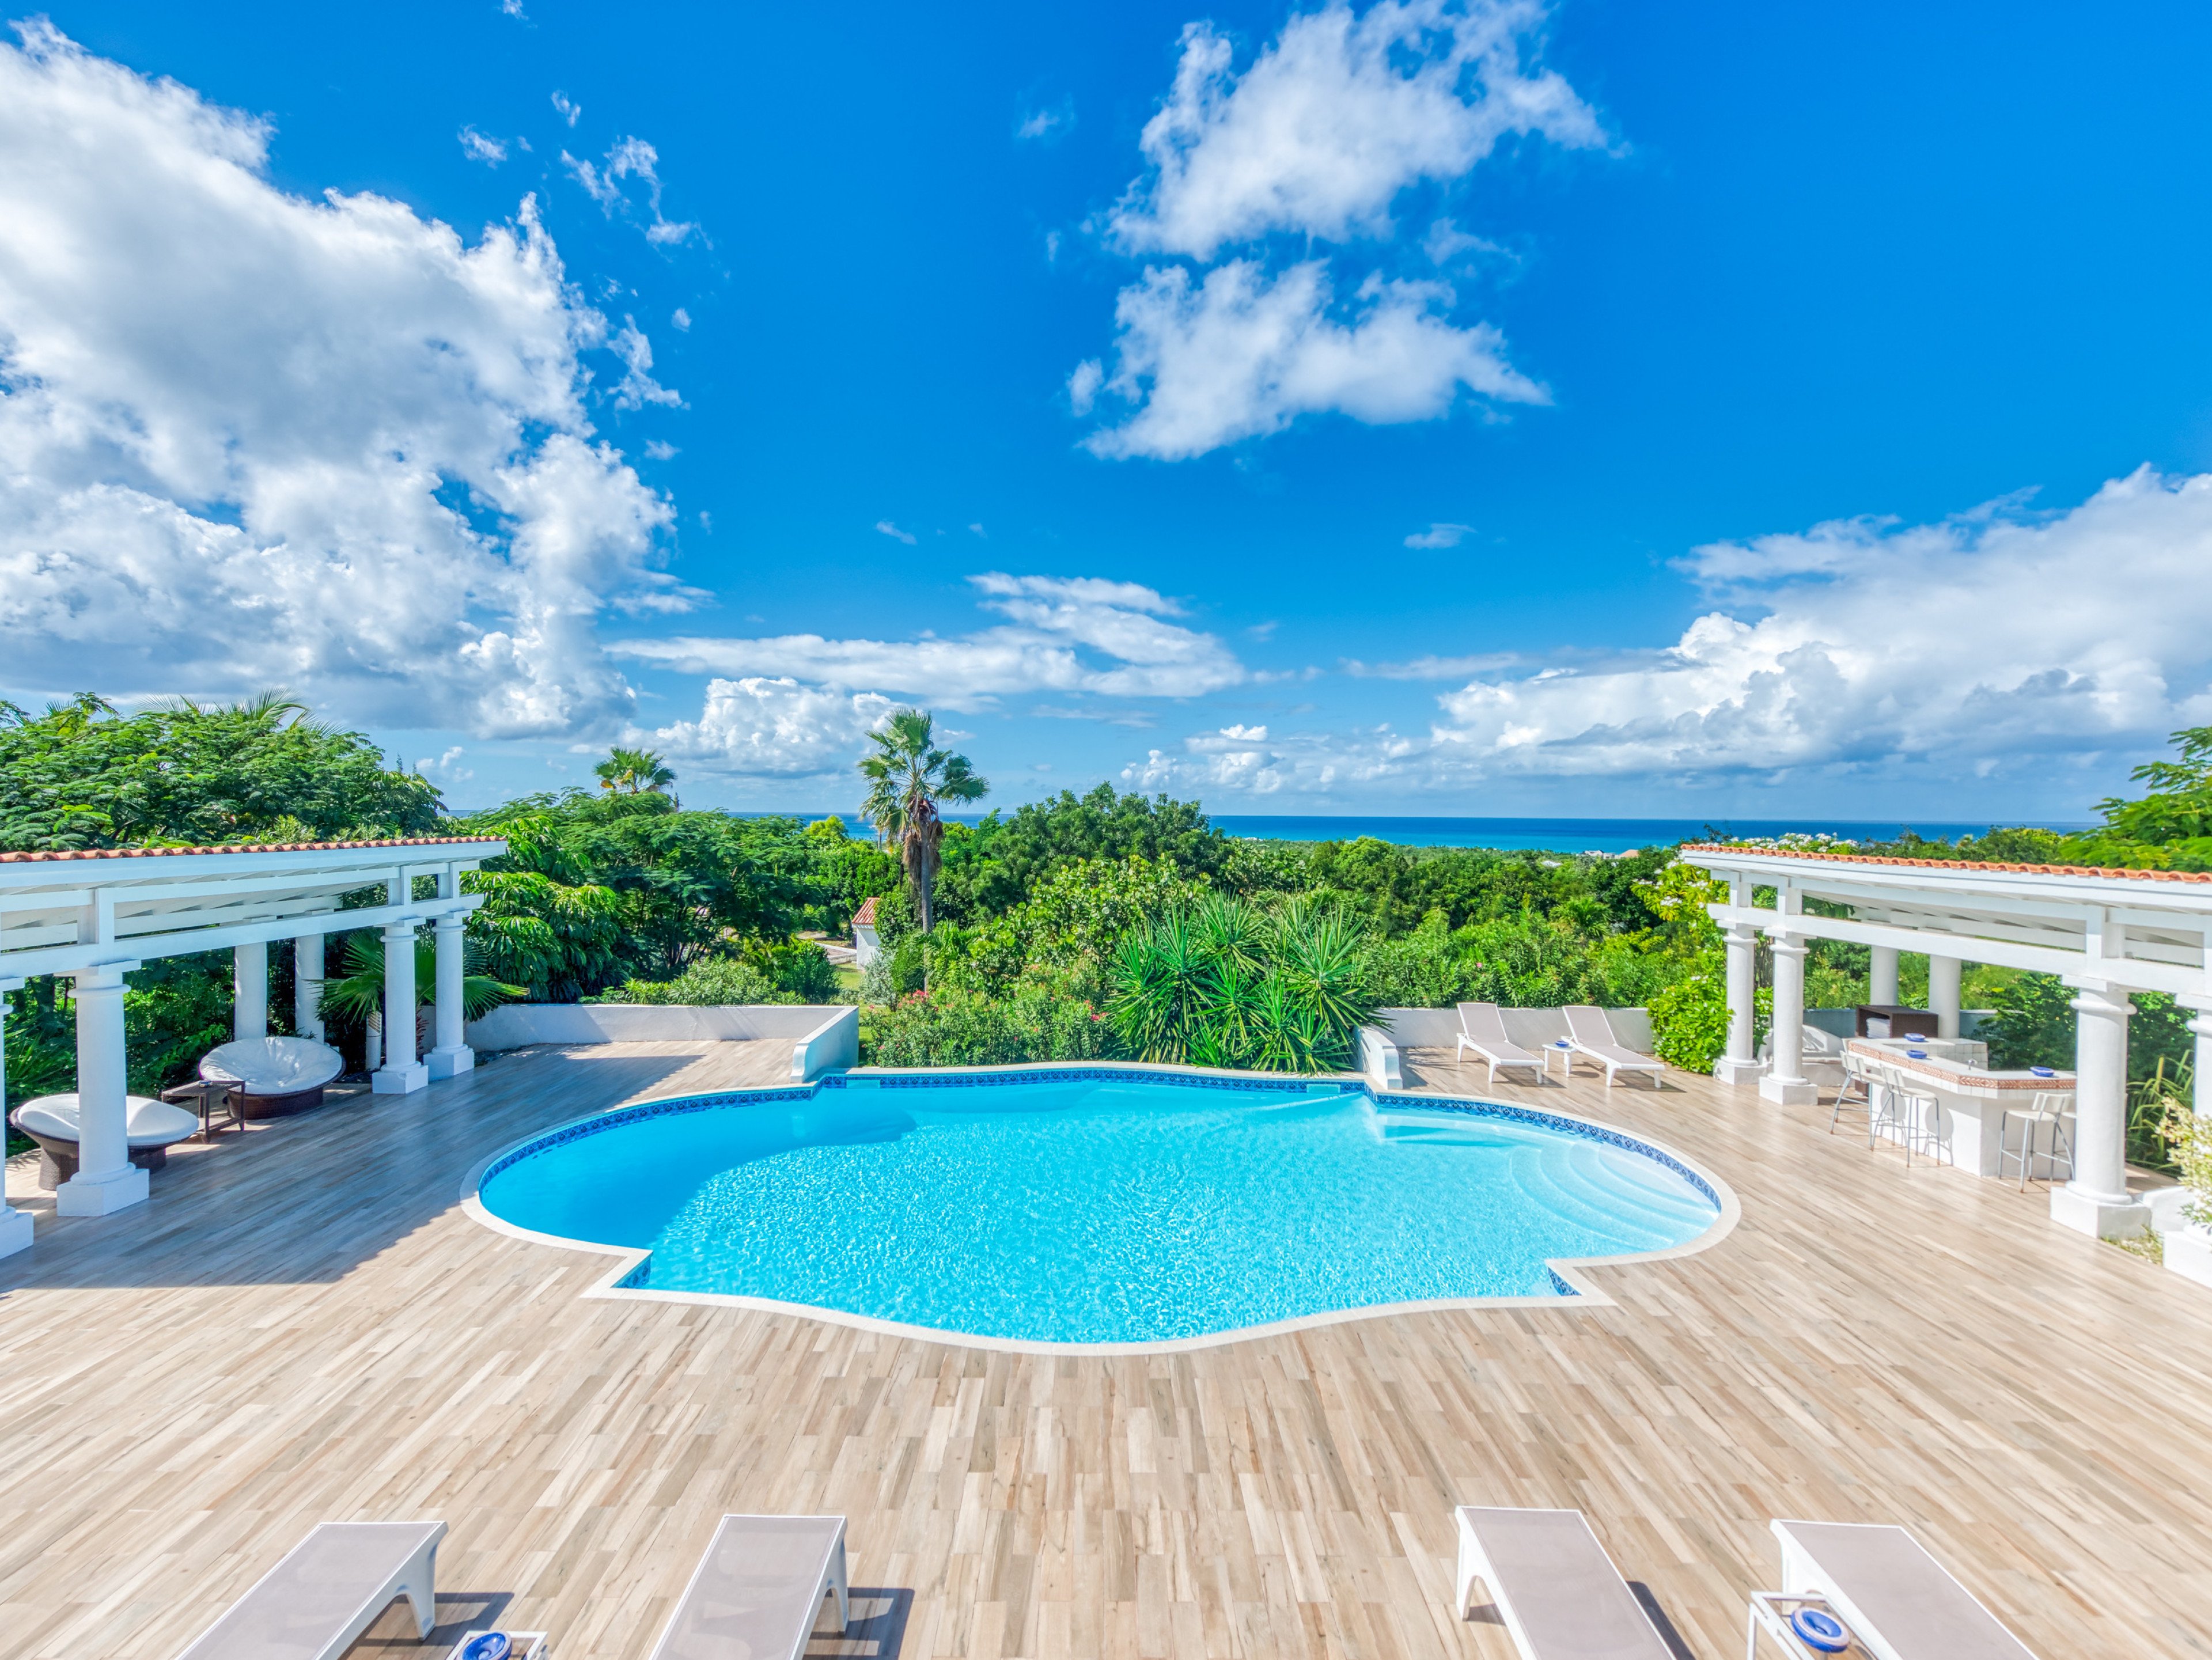 Pamplemousse villa rentals near Terres Basses beaches